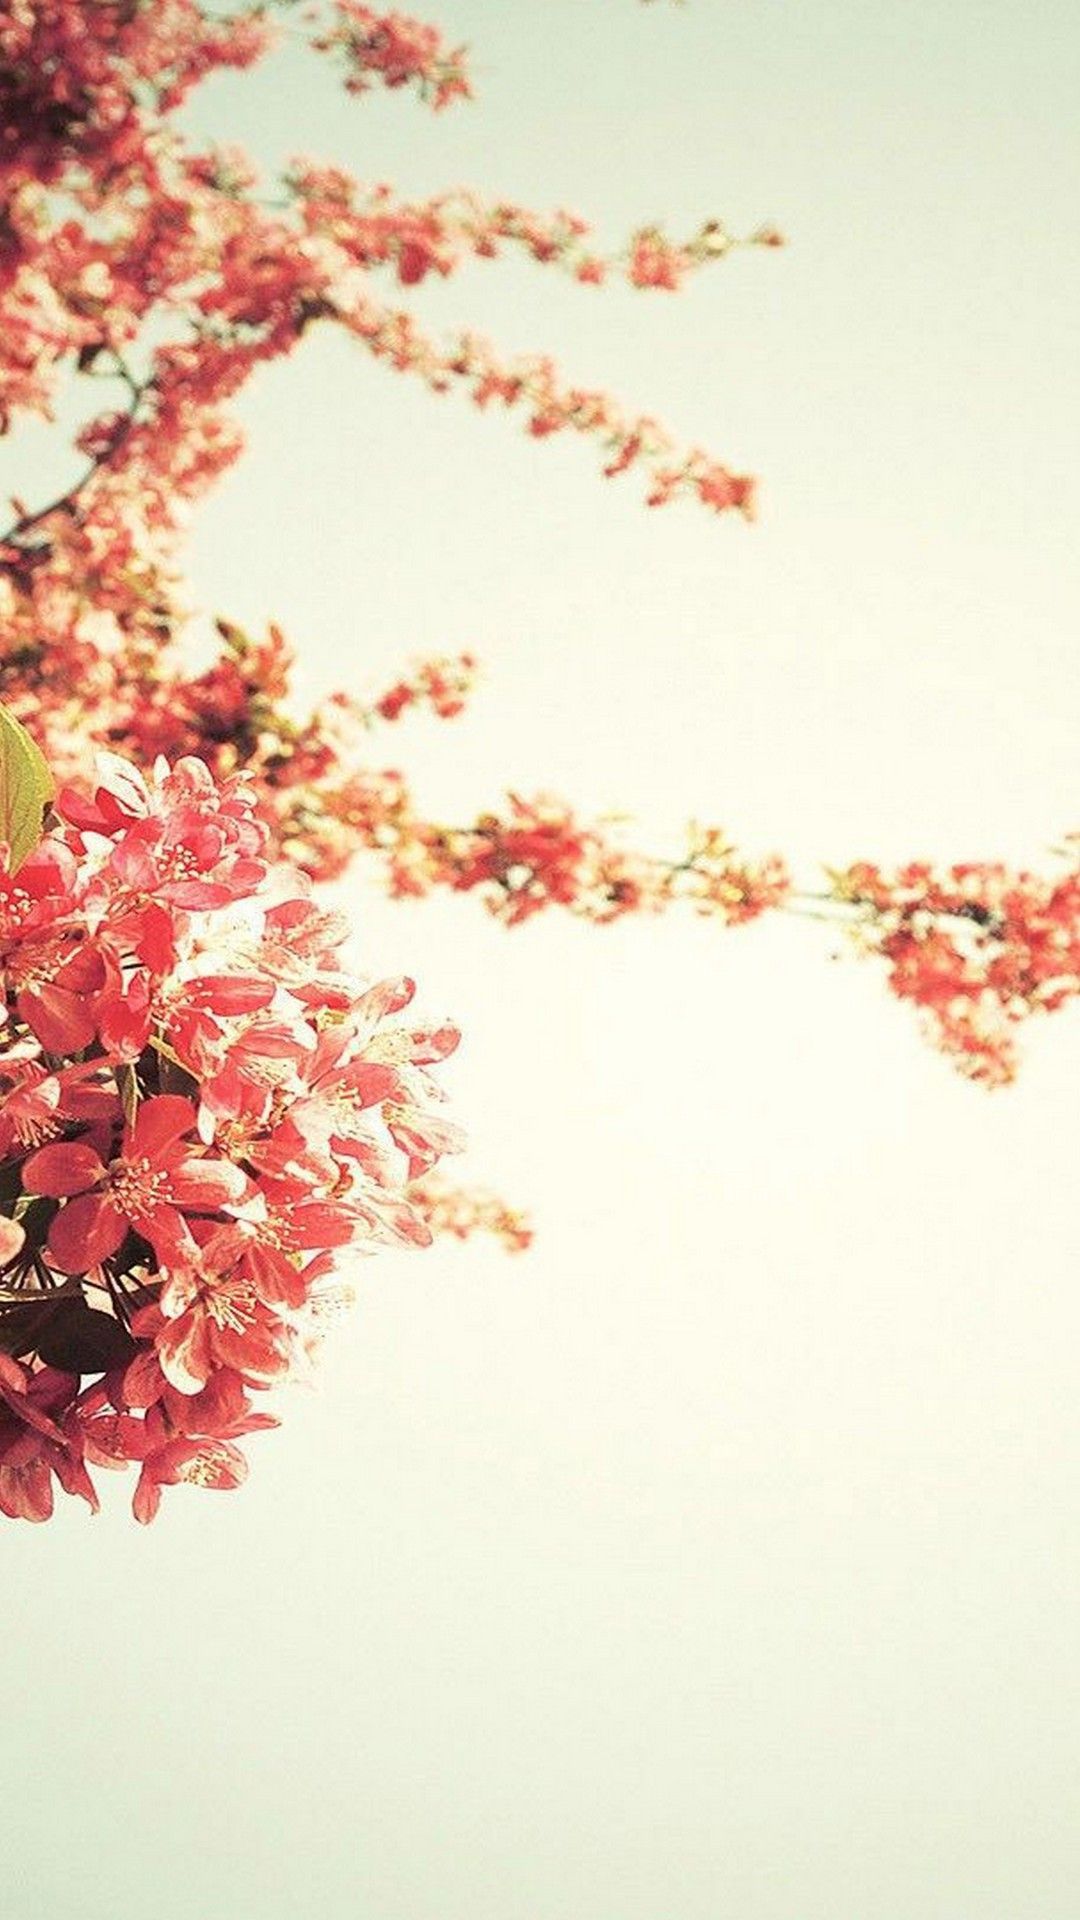 Spring Season Wallpaper For Phone. Best HD Wallpaper. Cute wallpaper, Phone wallpaper, HD cute wallpaper